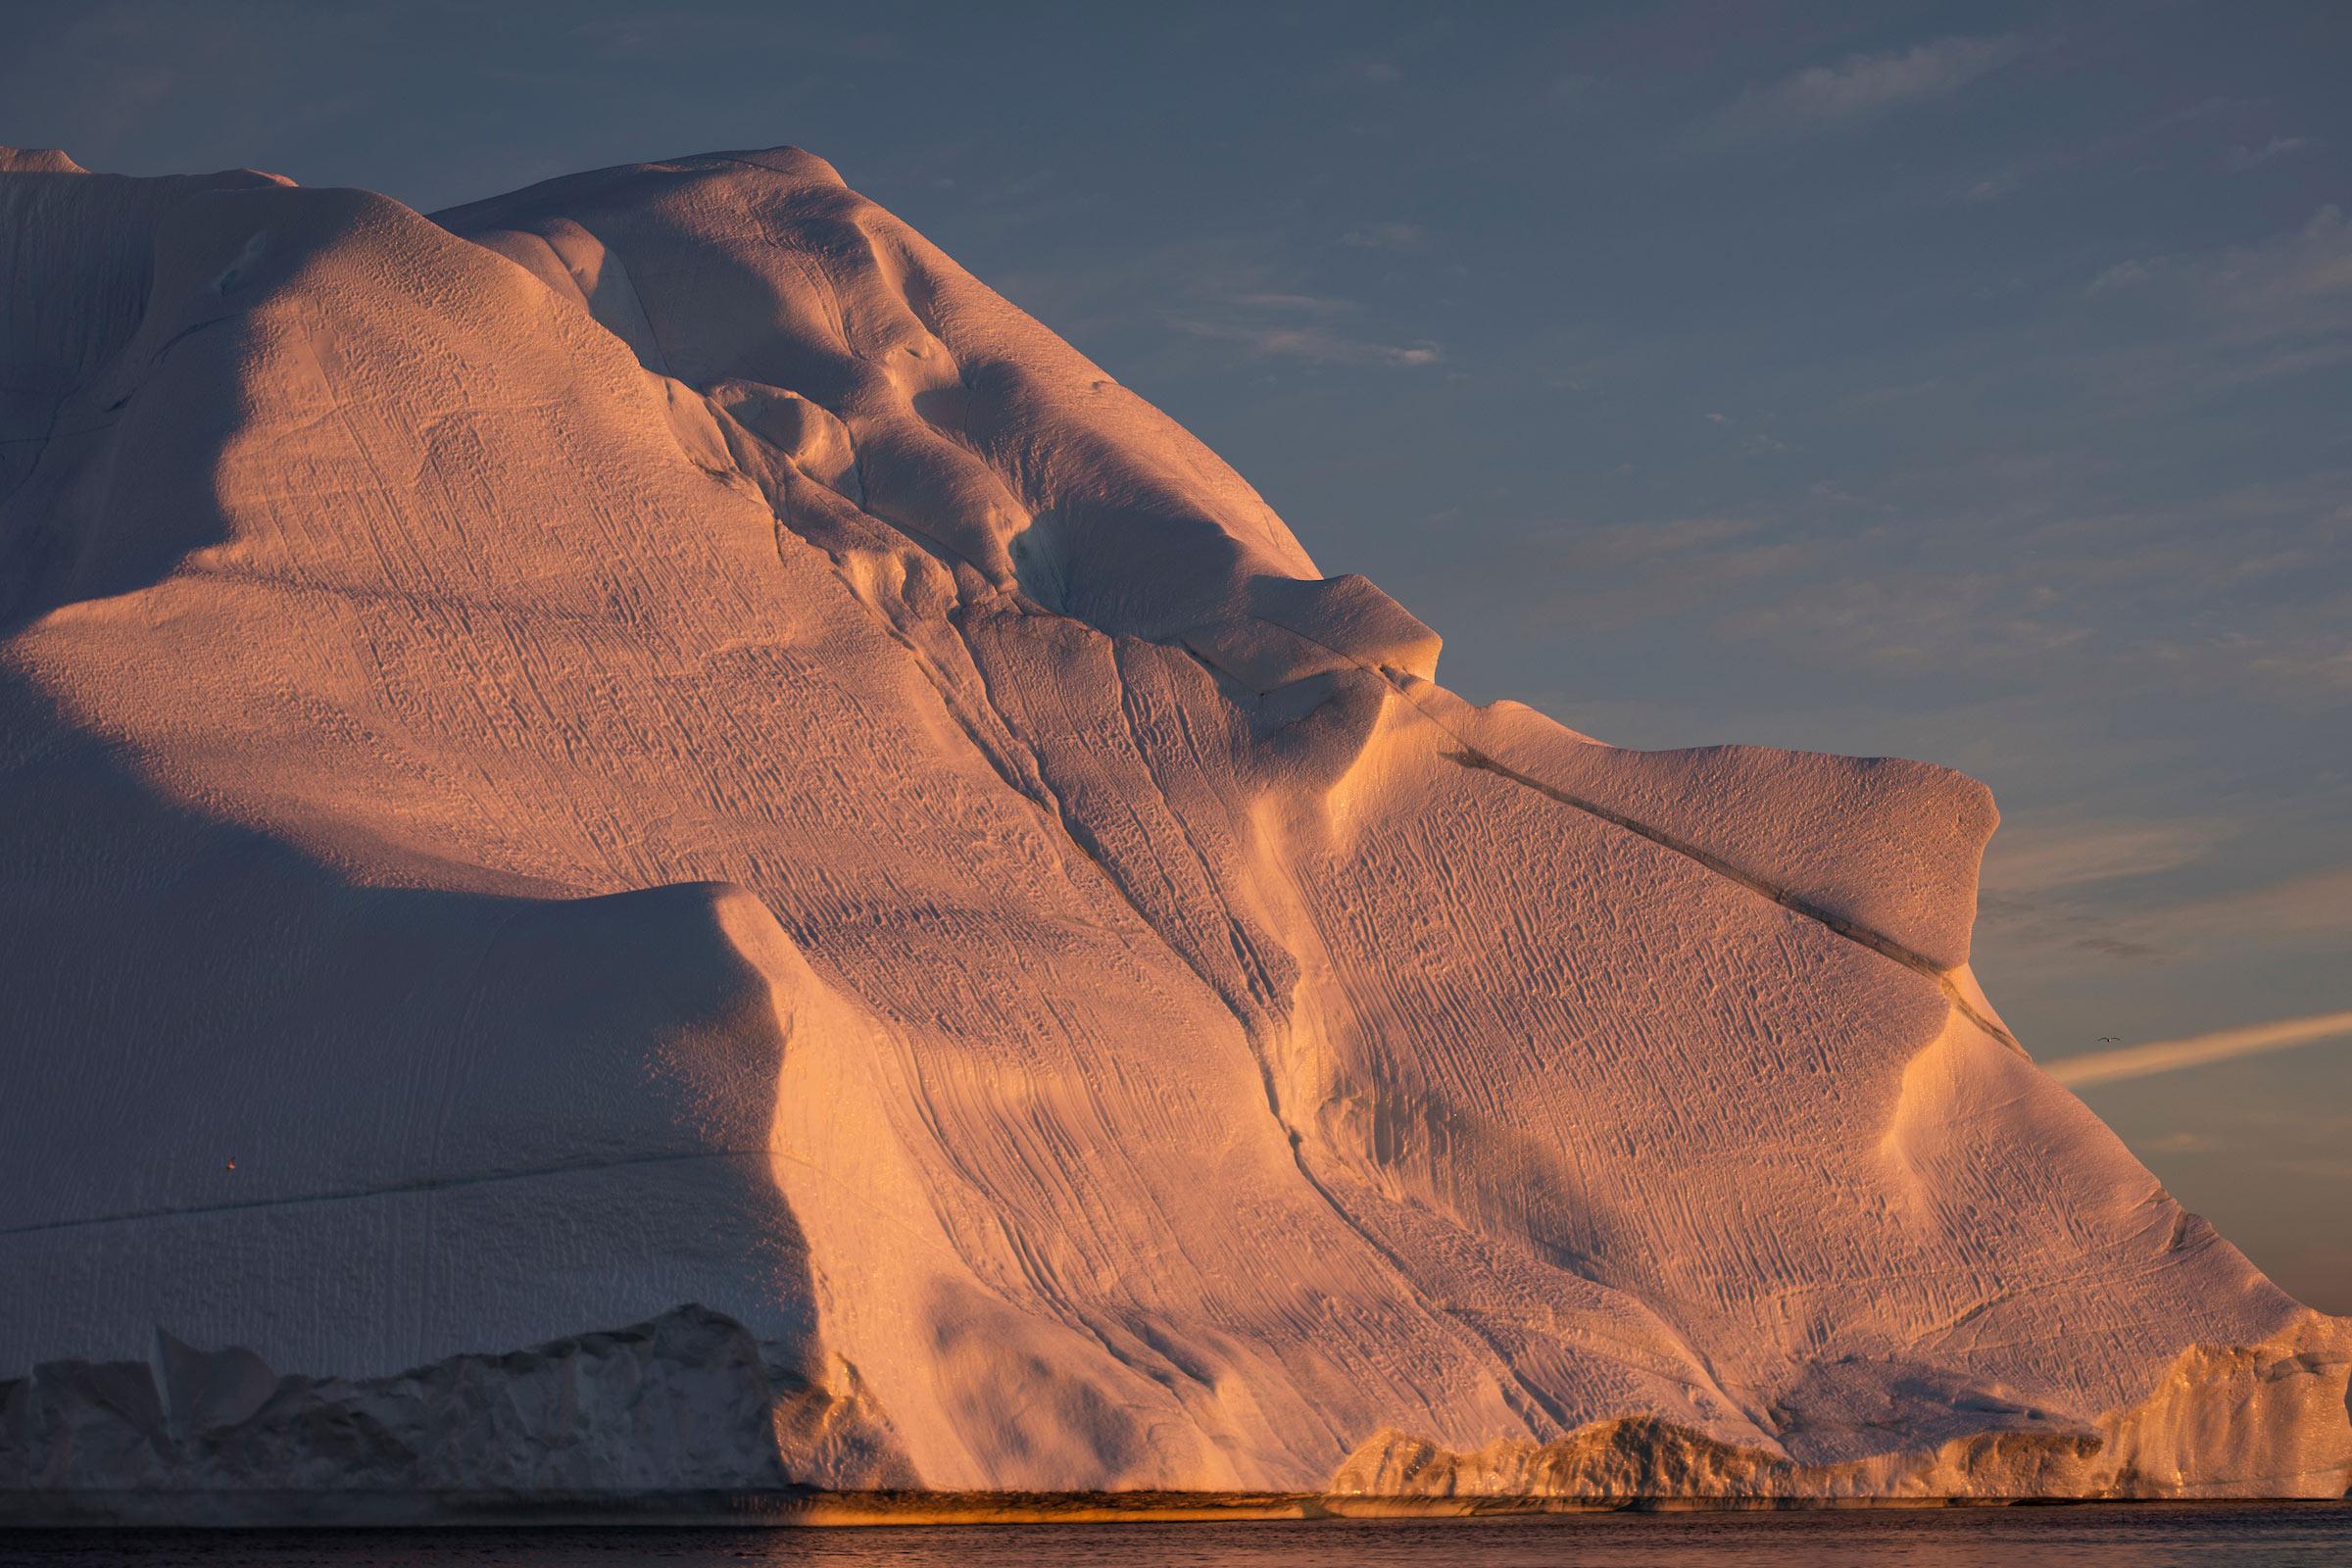 Sunset Light. Photo by Aningaaq Rosing Carlsen - Visit Greenland